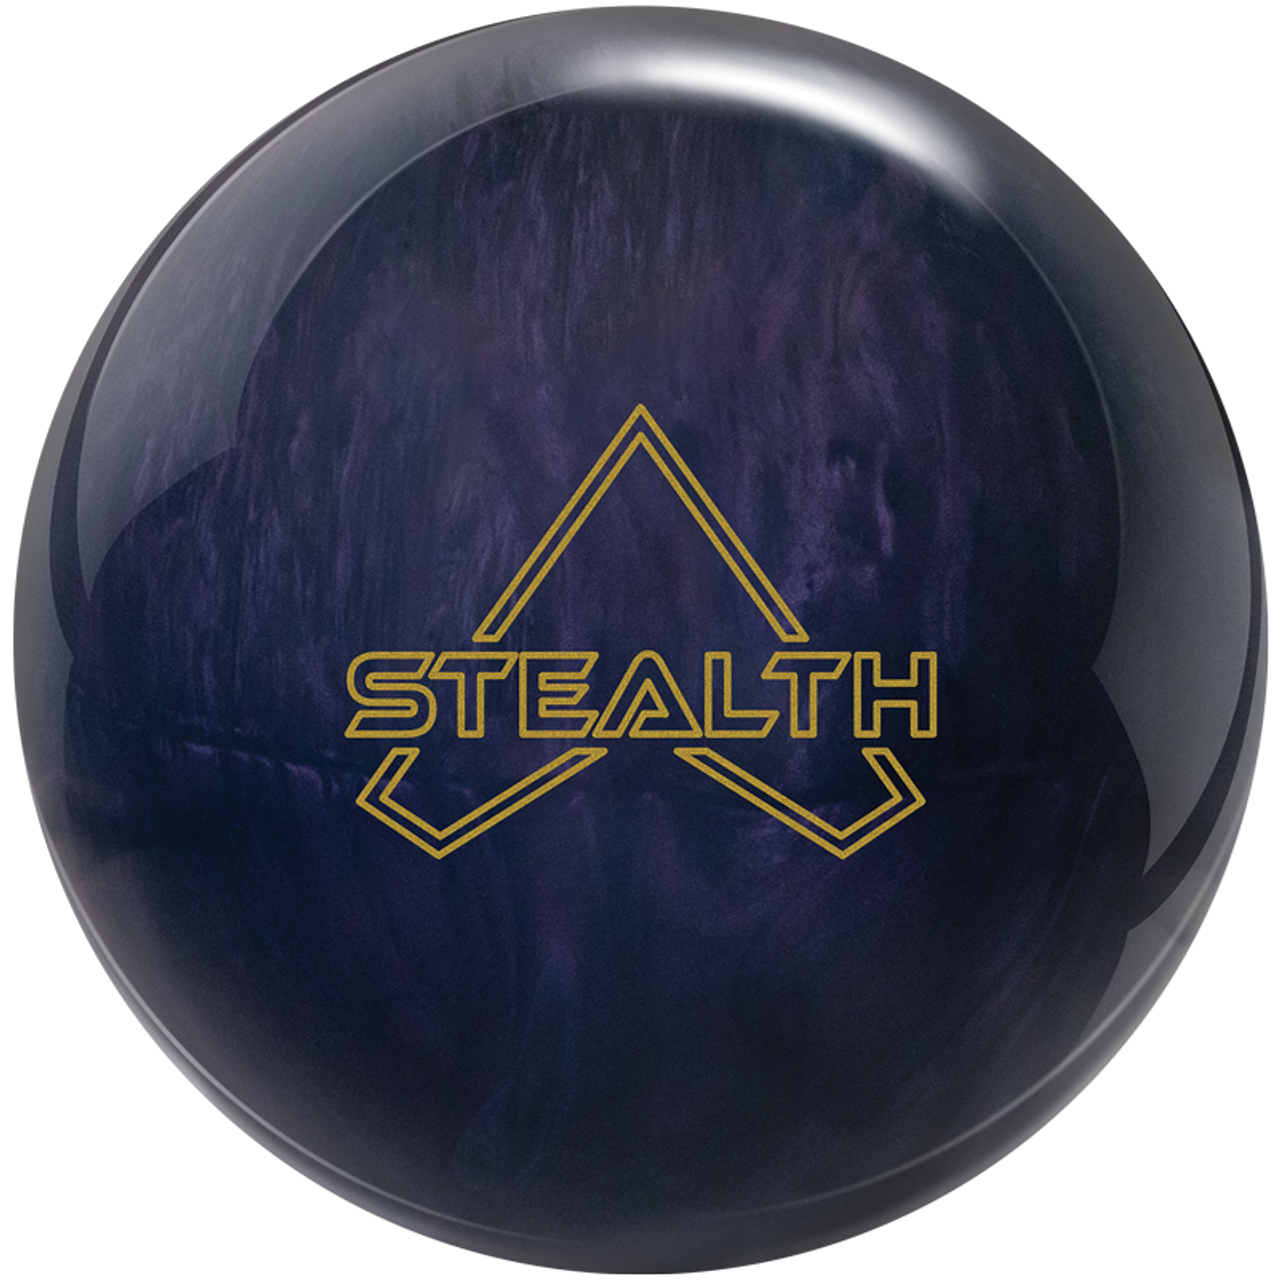 Track Stealth Pearl Bowling Ball | FREE SHIPPING | GebhardtsBowling.com